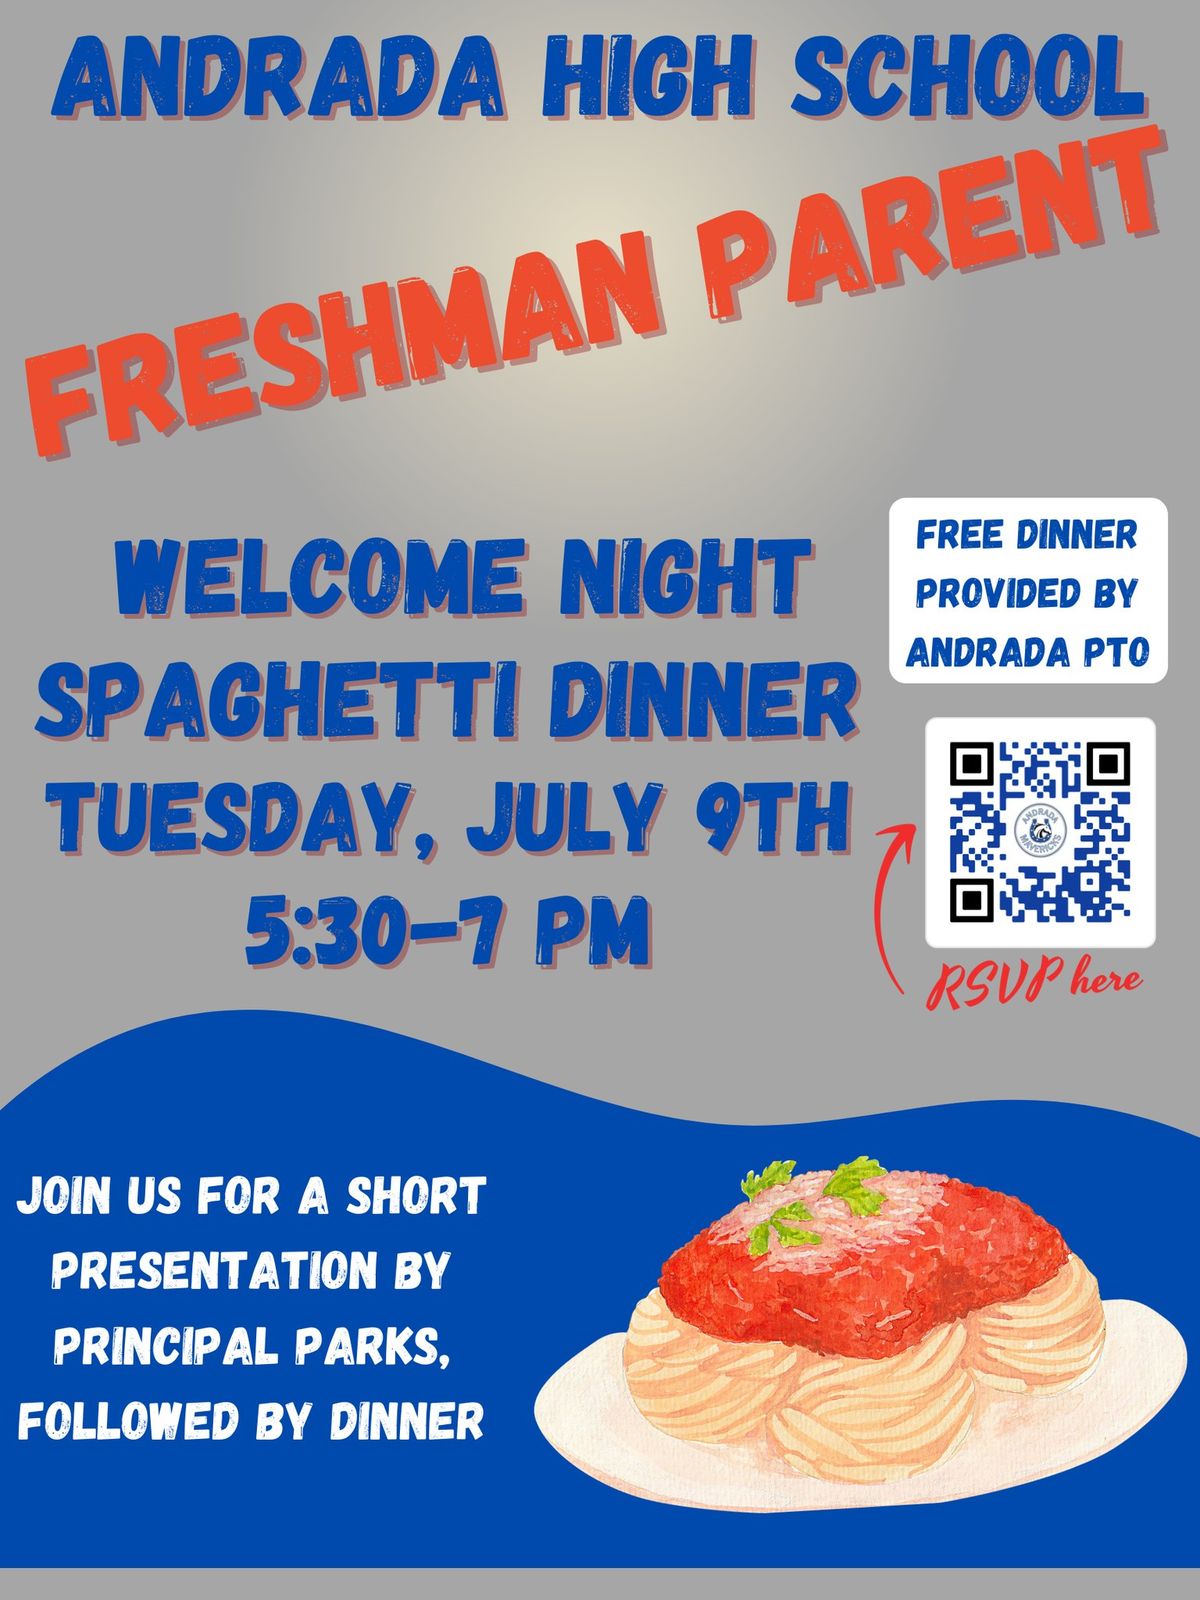 Freshman Parent Welcome Night & Spaghetti Dinner!